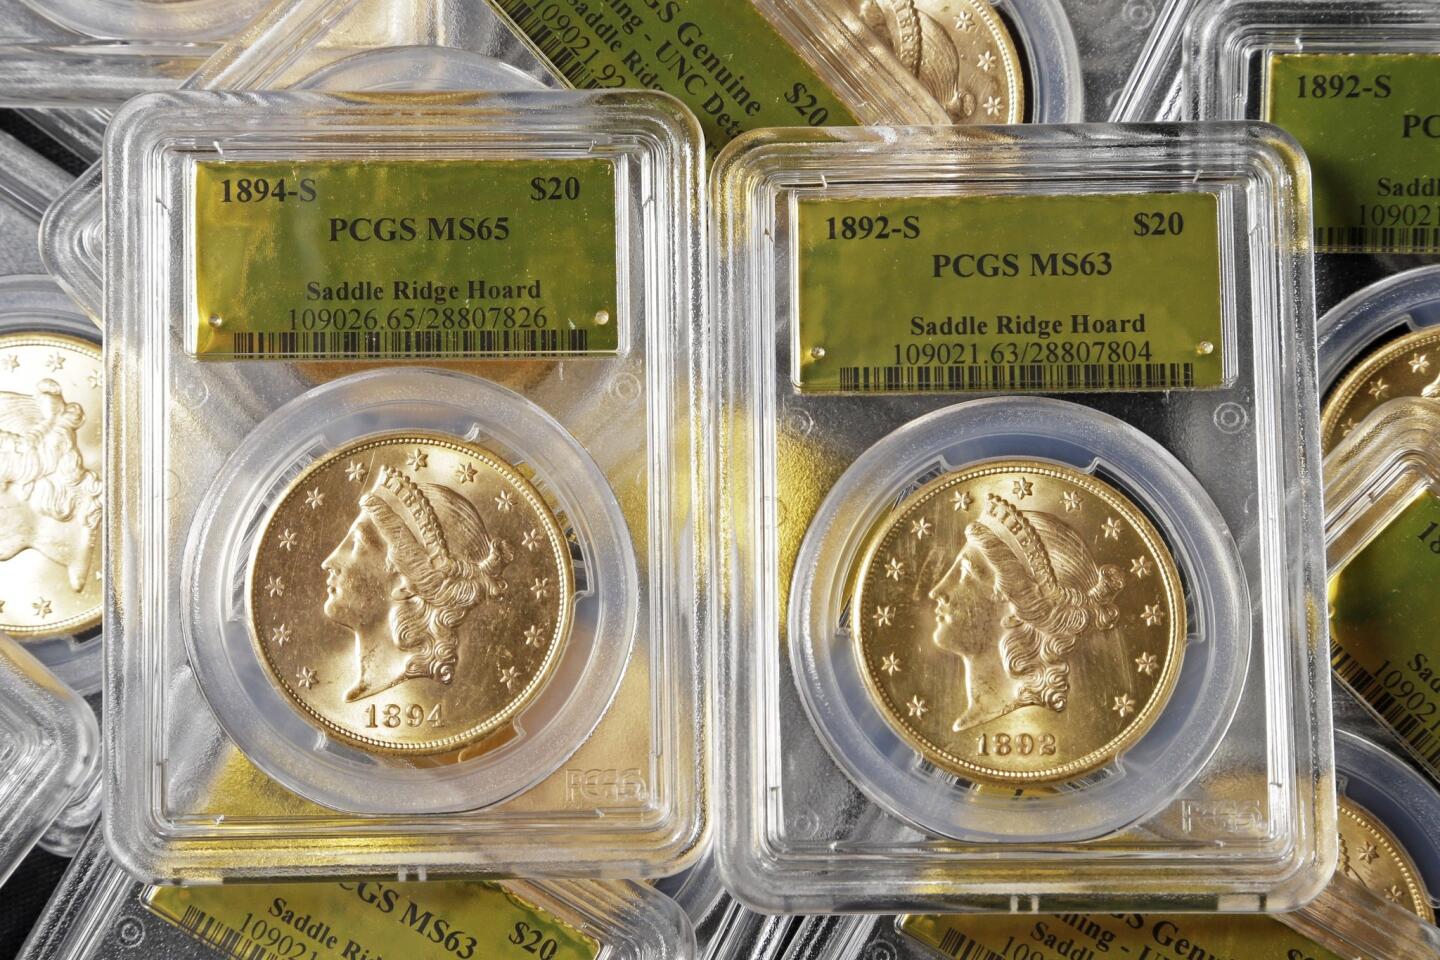 Los Angeles Rams Super Bowl LVI Champions Gold Mint Coin – Shop LA Times